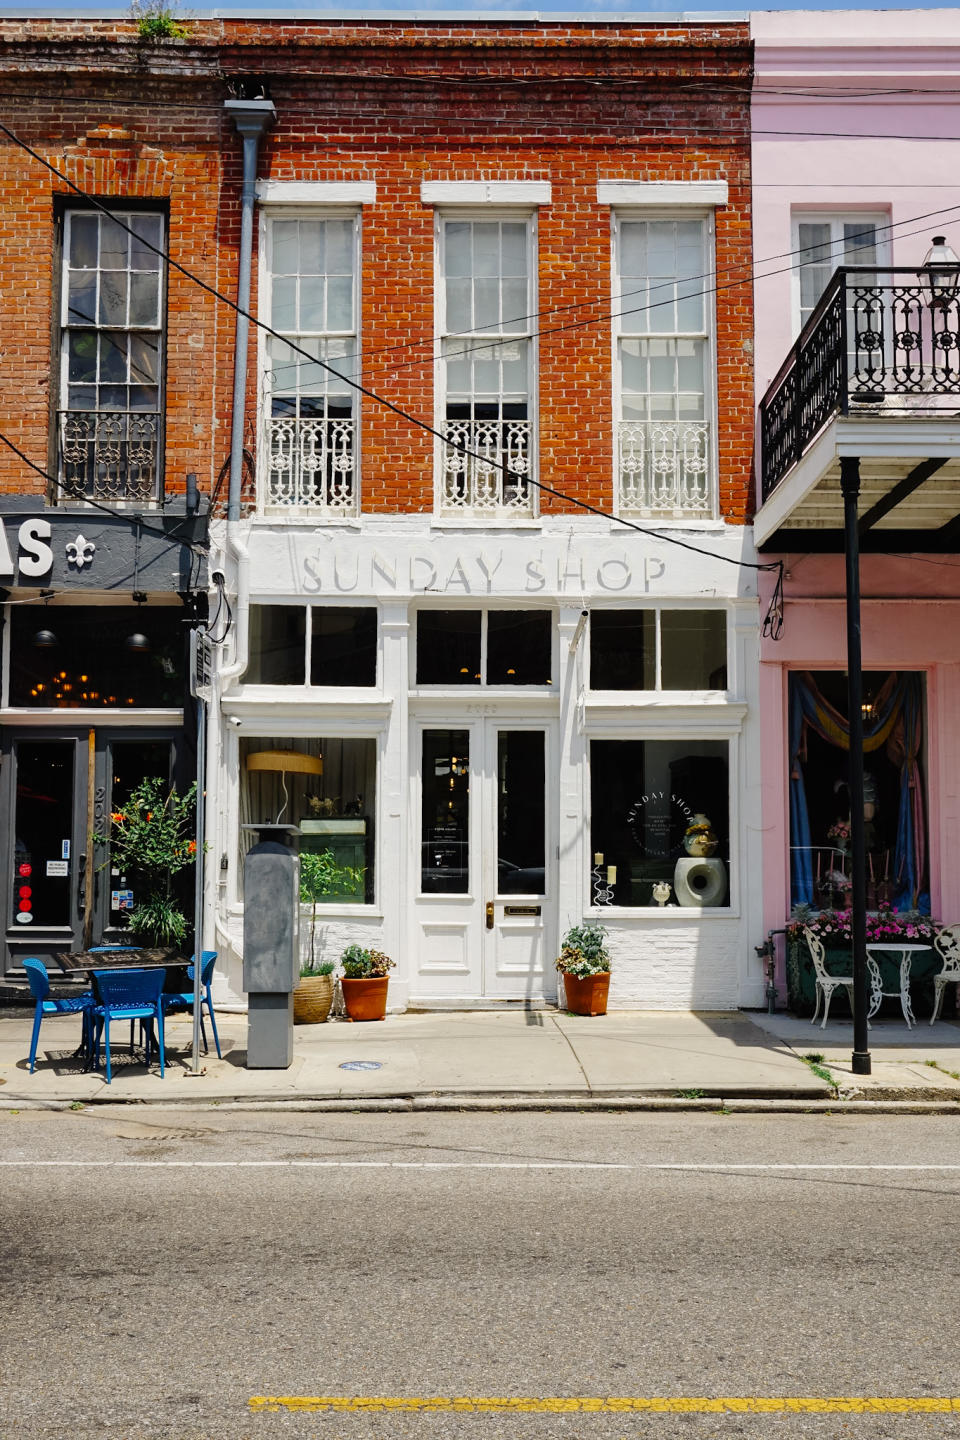 Sunday shop on Magazine Street, New Orleans, Louisiana